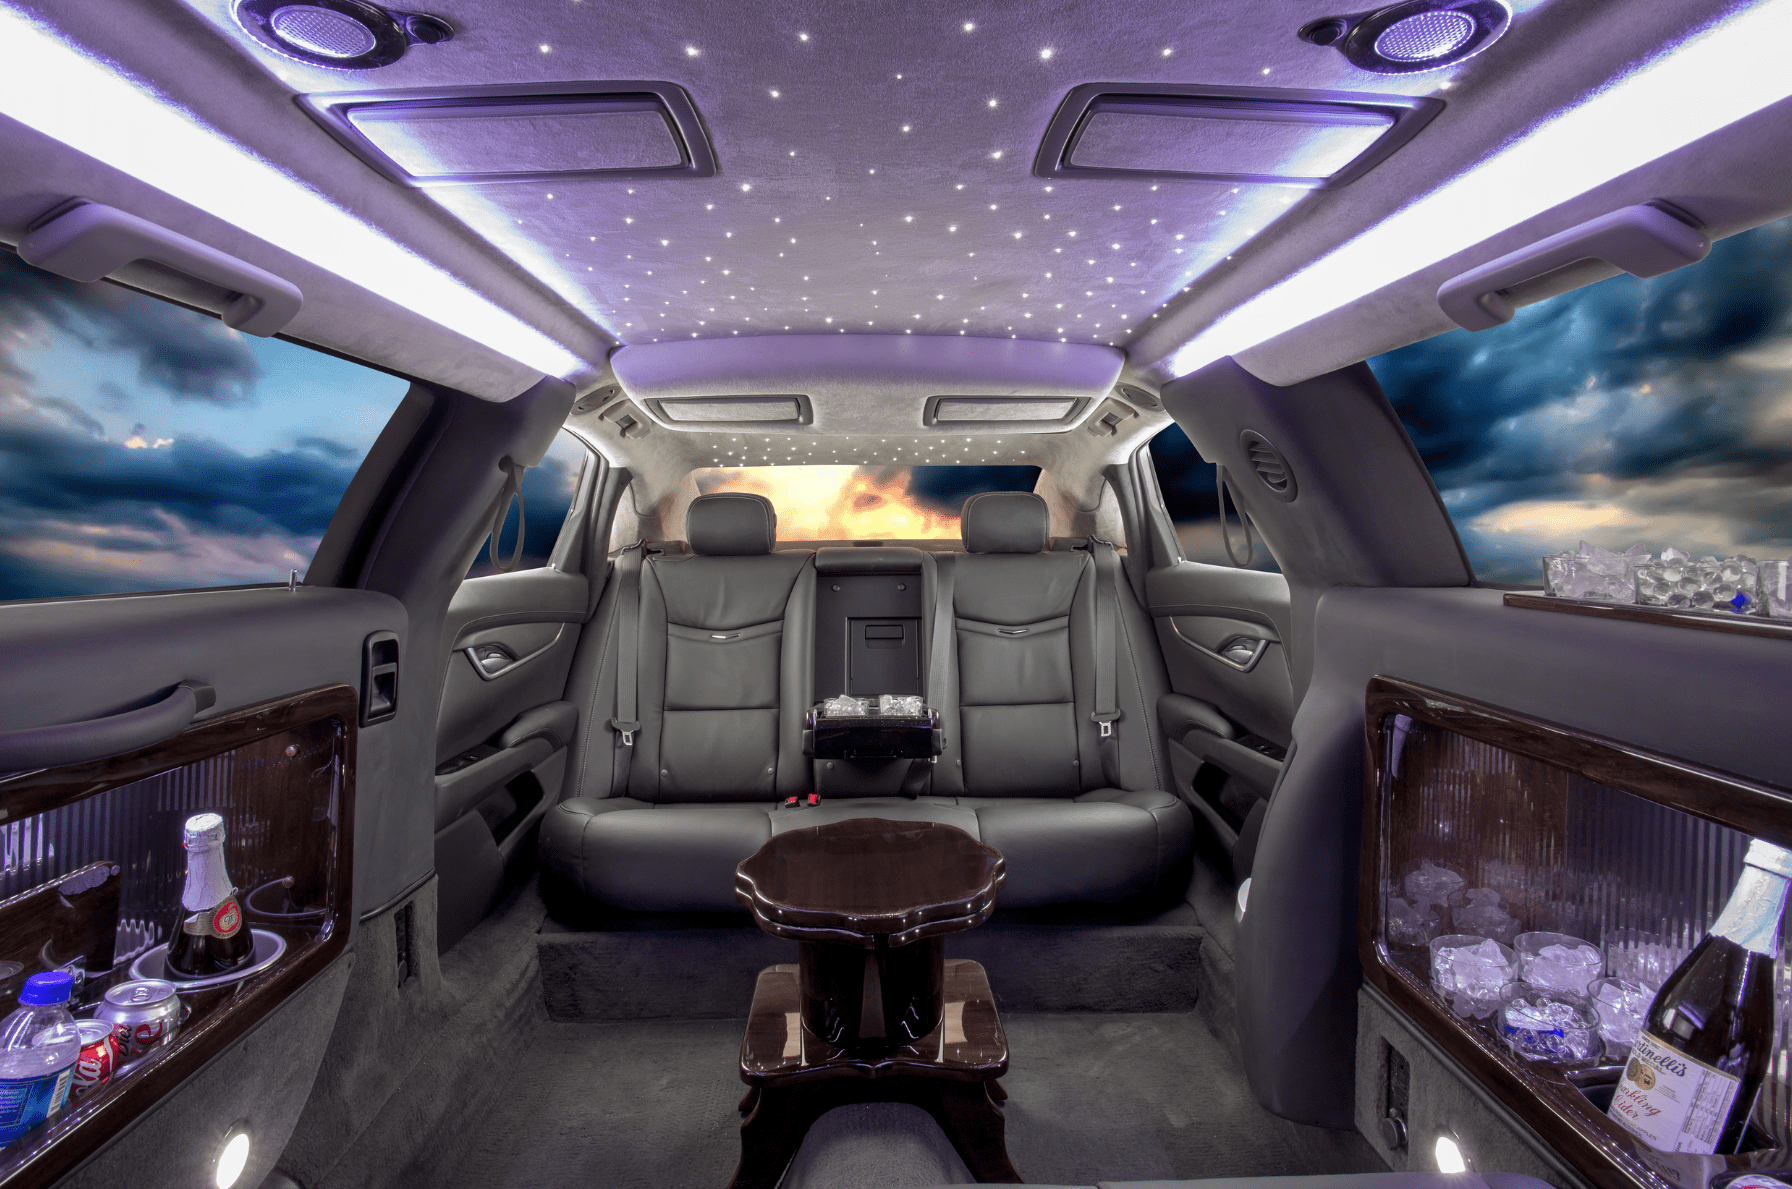 Range Rover – Premier